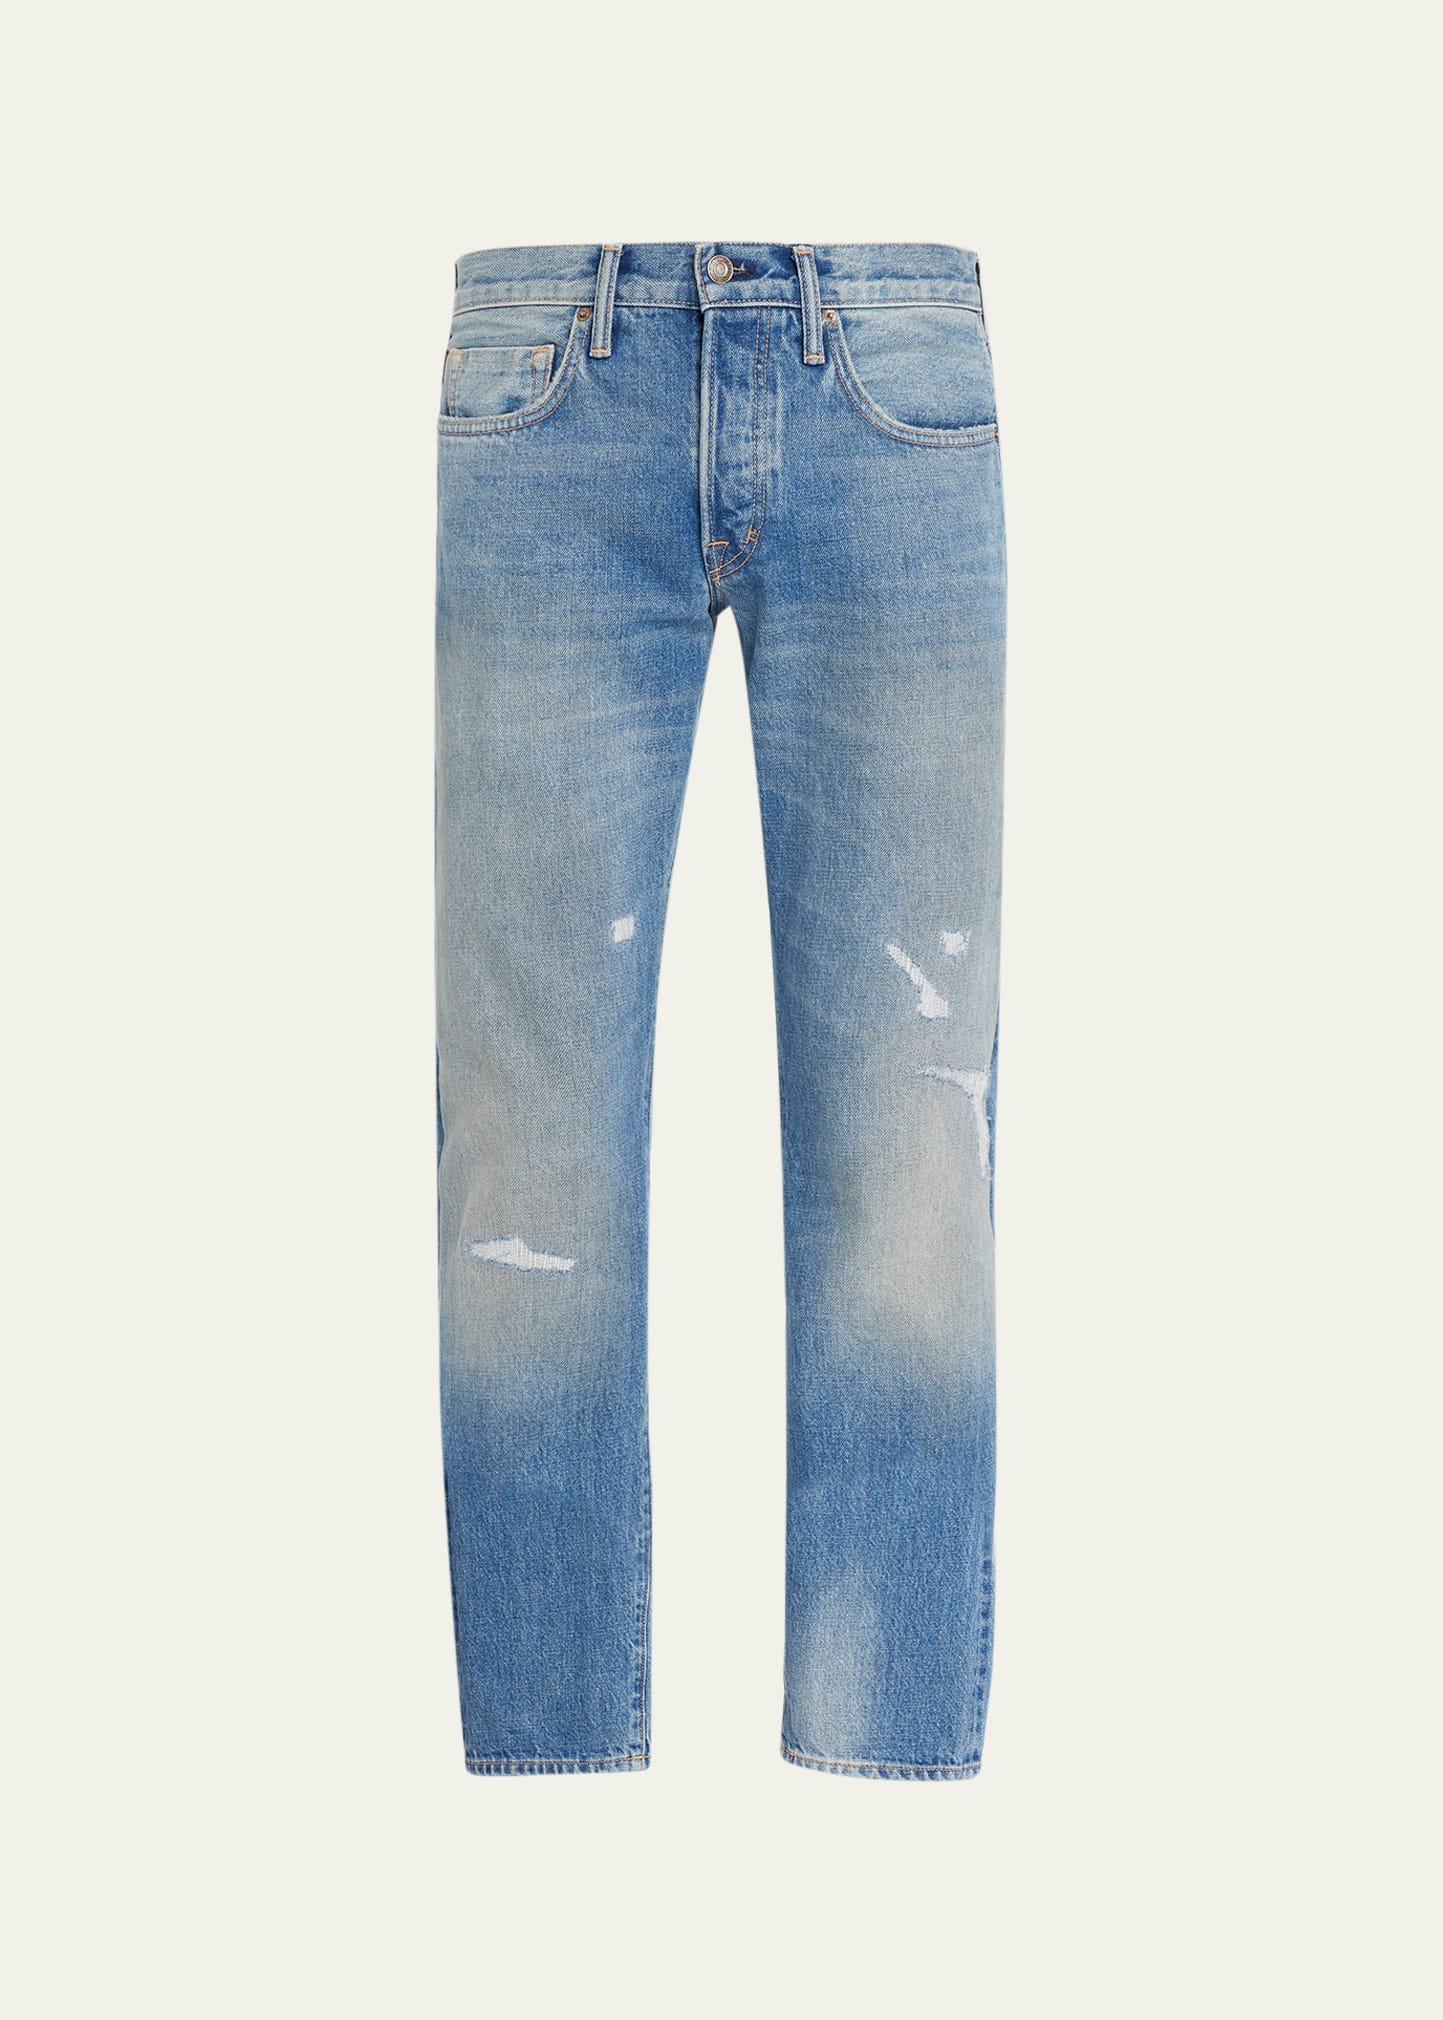 Men's Slim Fit Distressed Jeans